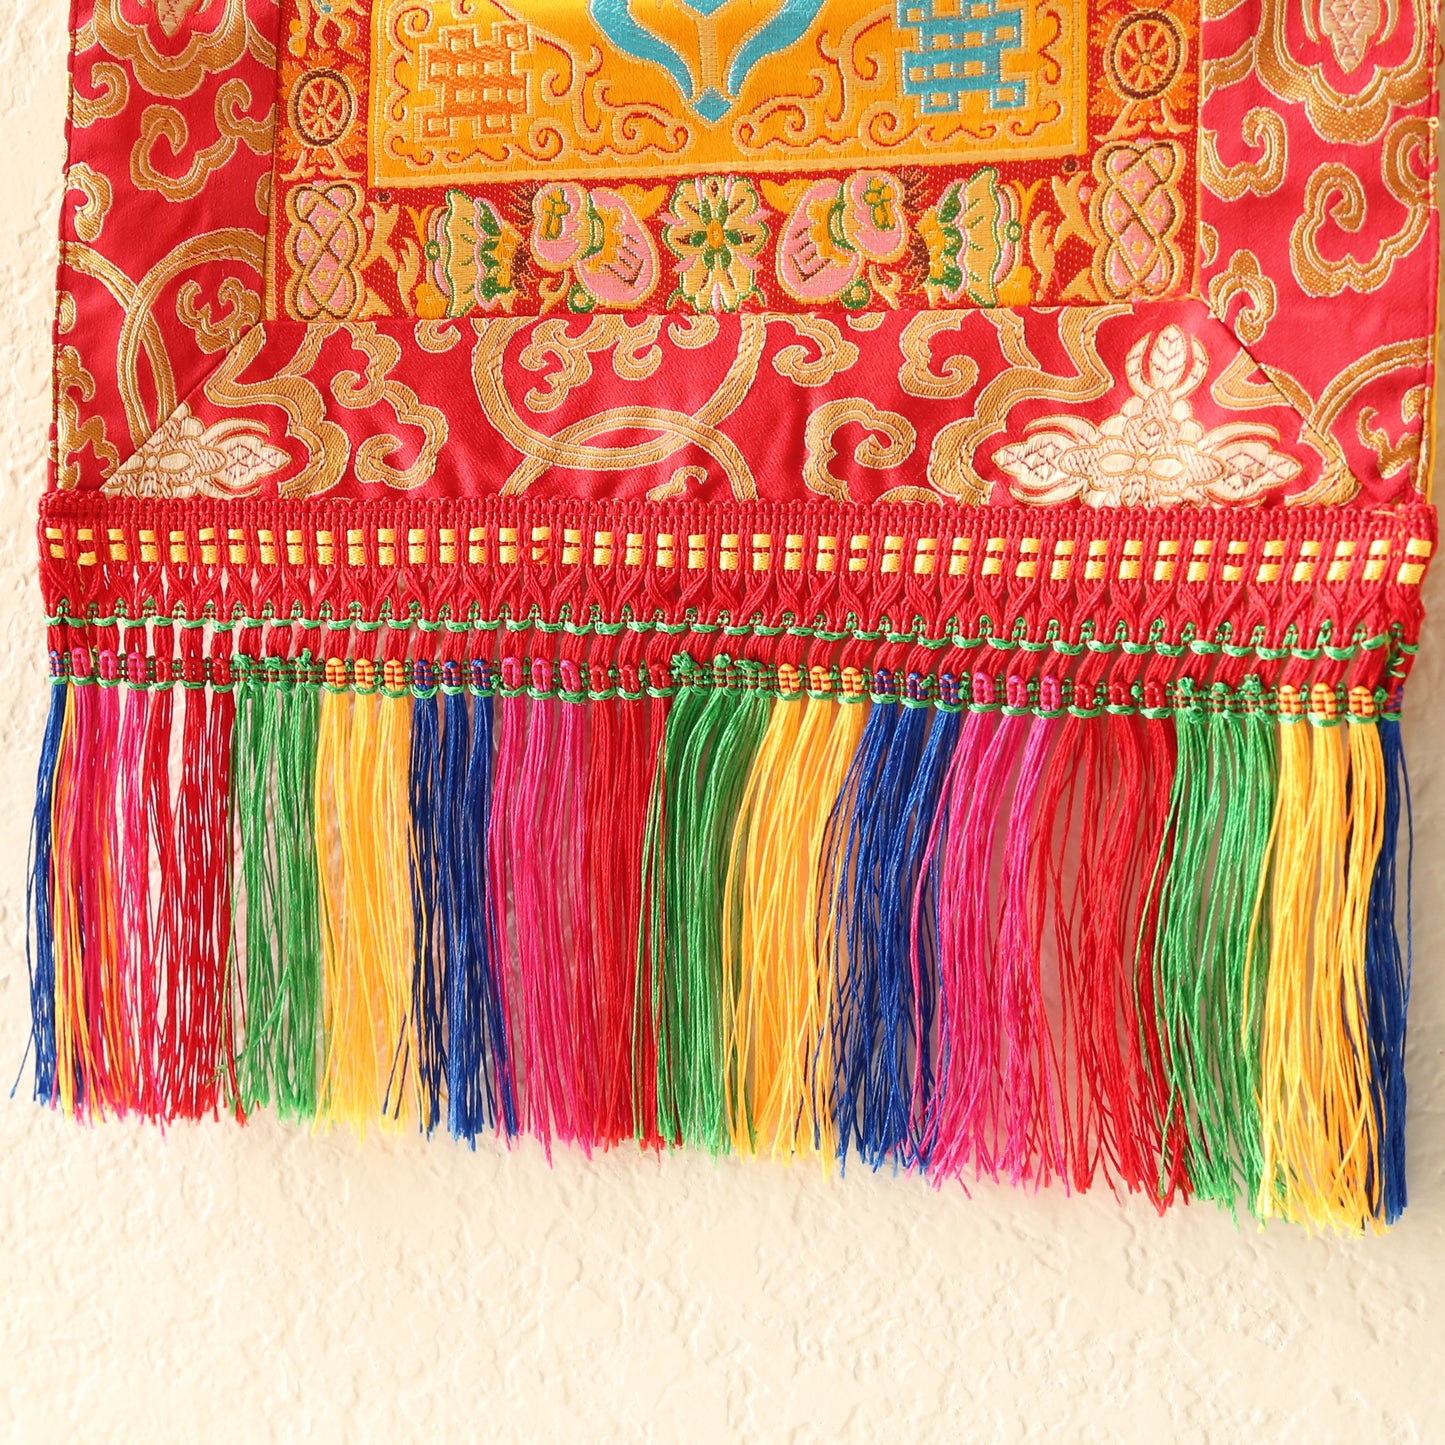 Tibetan Buddhist Cross Vajra Dorje Wall Hanging Tassels Small Tapestry, 18"X12", Asian Chinese Indian Wall Art Home Décor